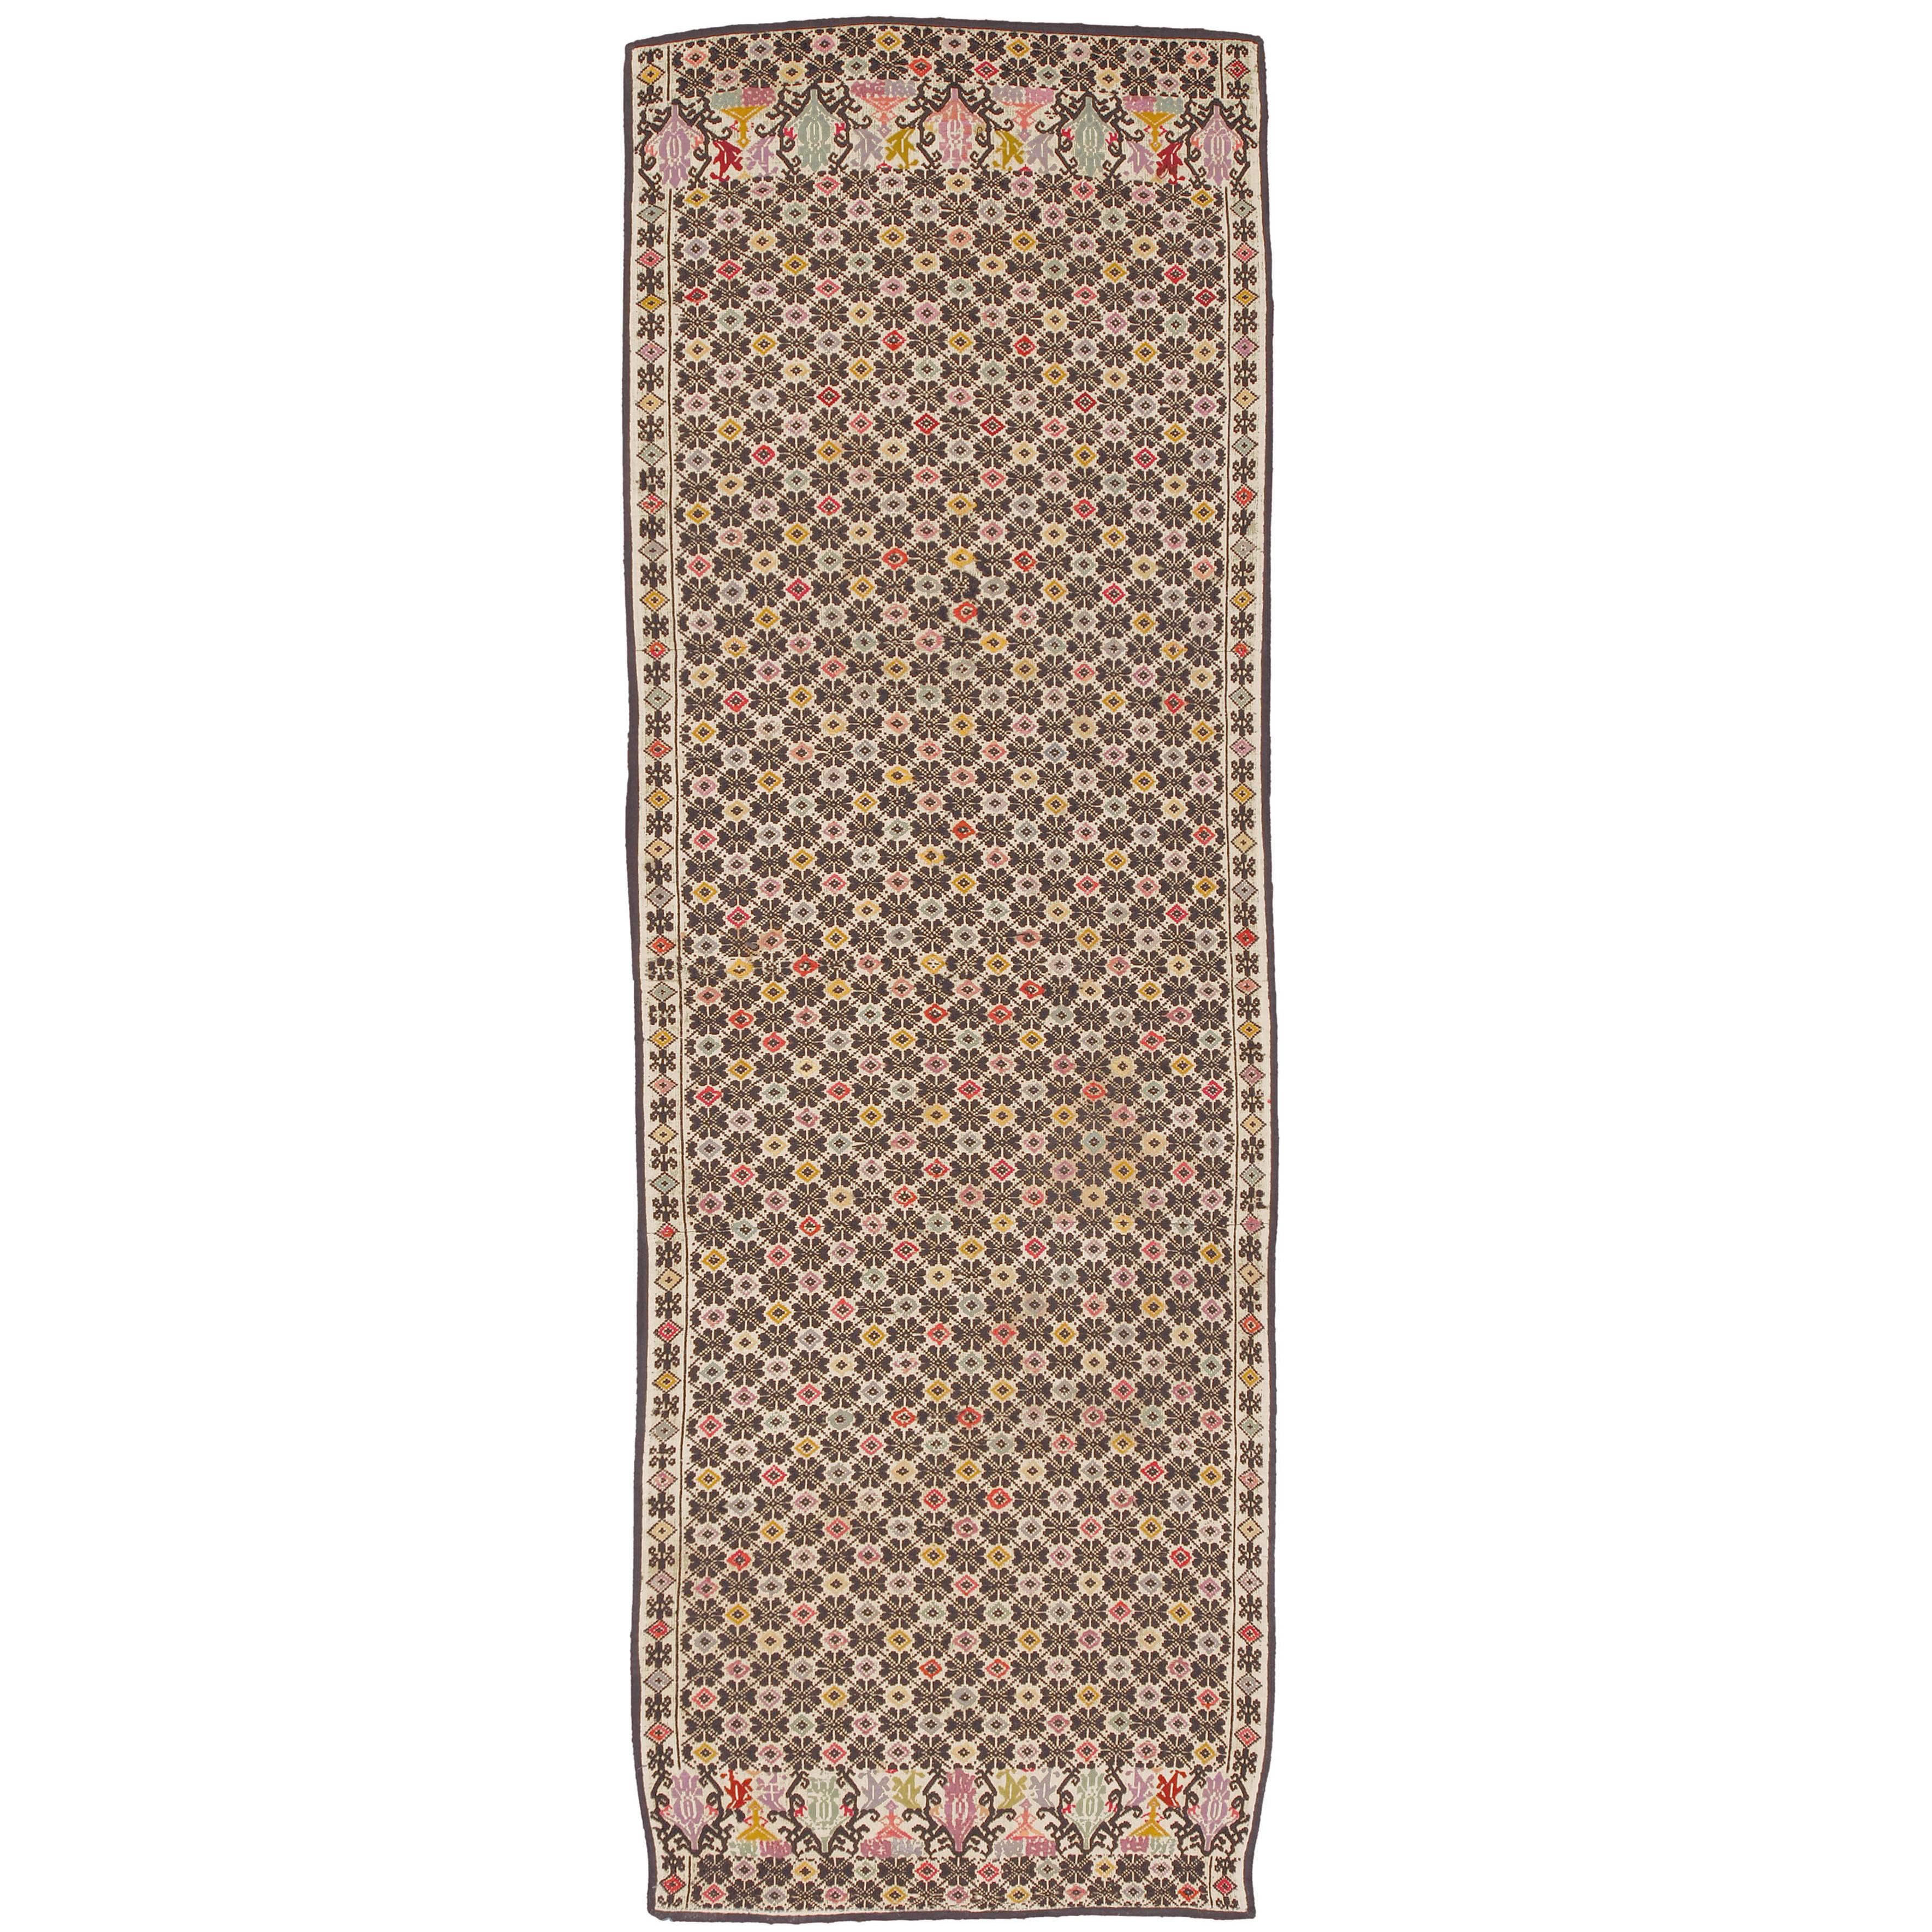 Late 19th Century Needlepoint Carpet